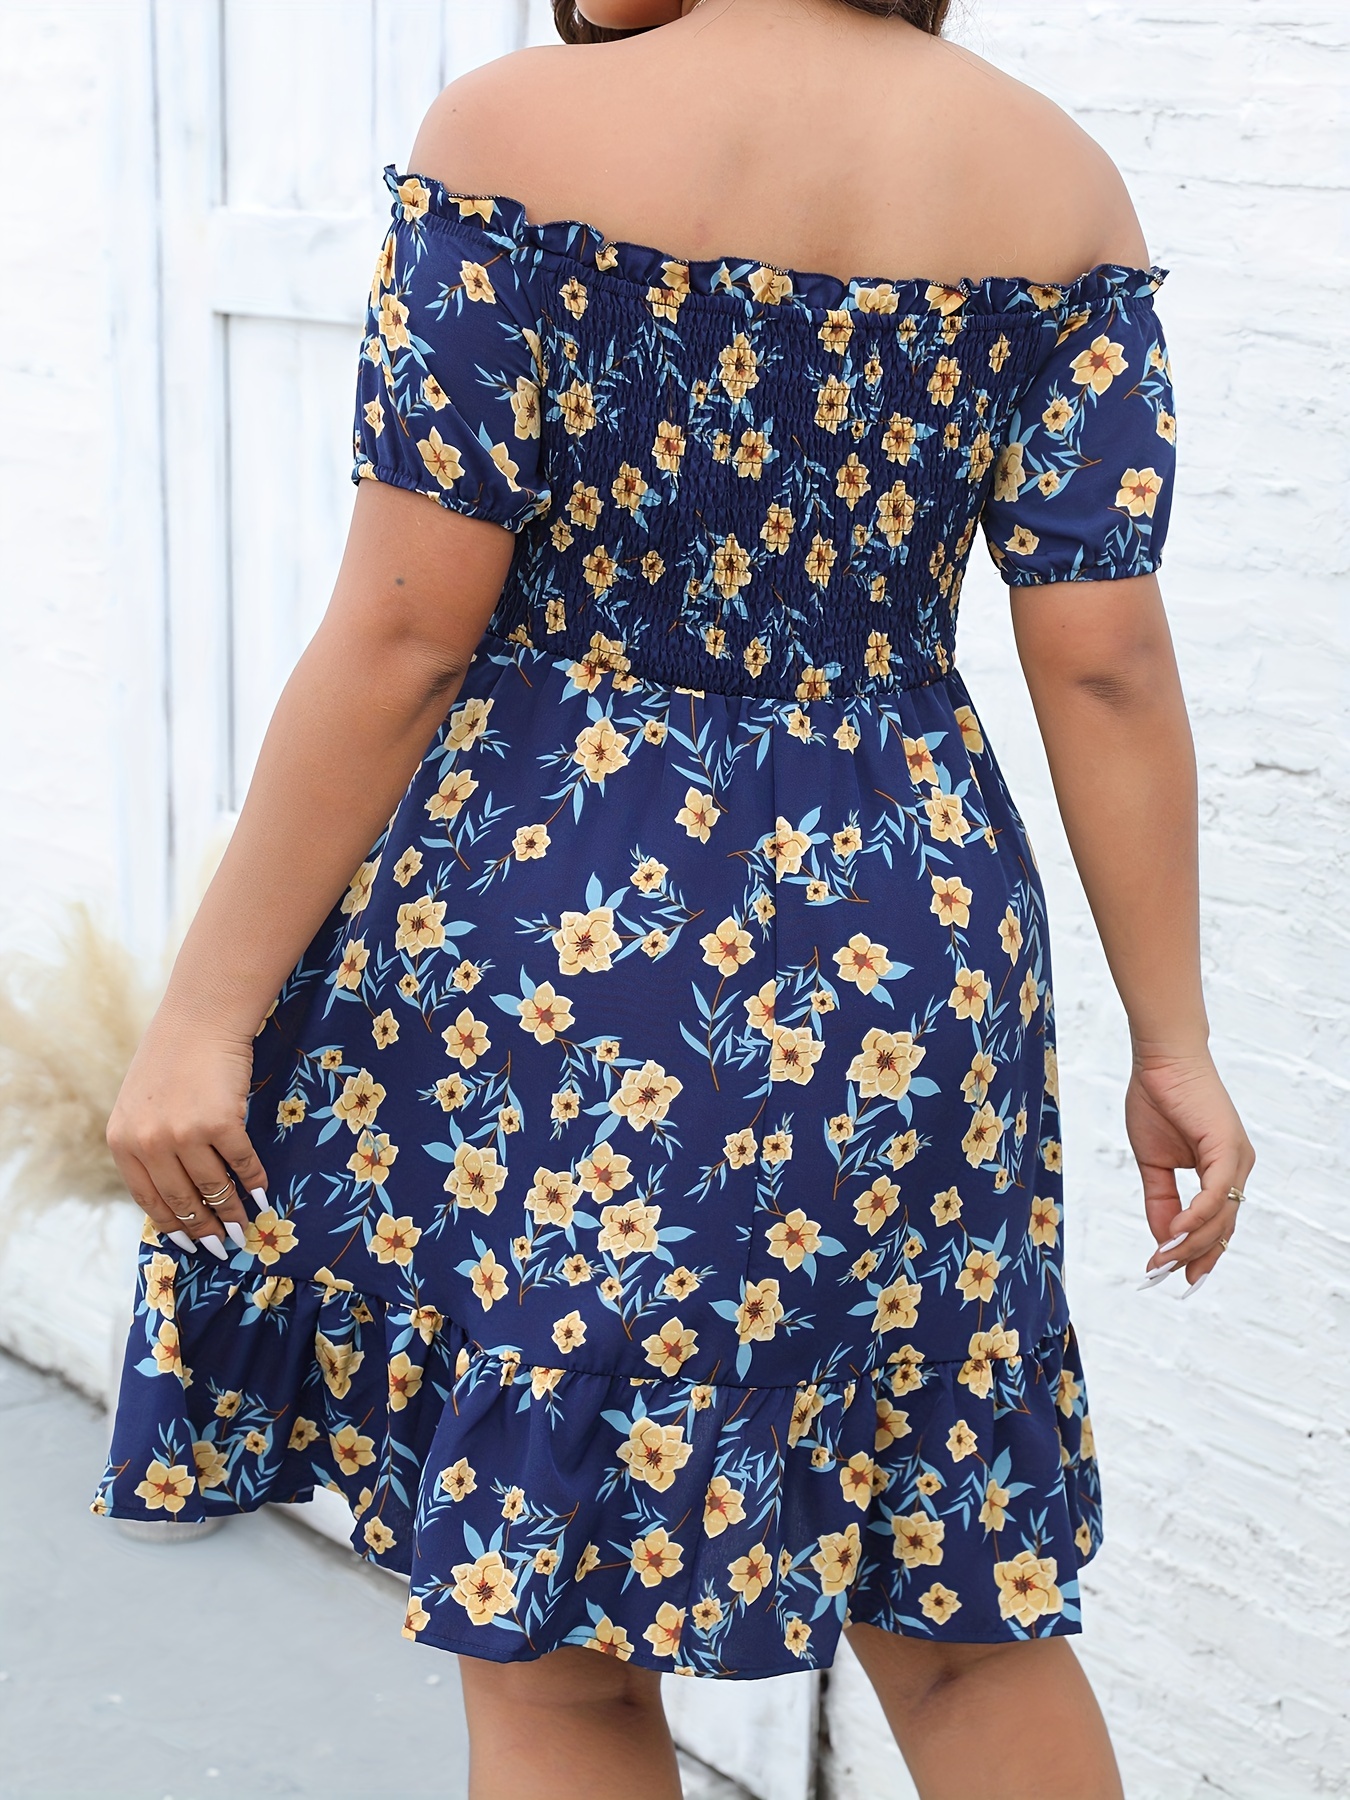 BELAROI Women's Short Sleeve Swing Plus Size Dresses Casual Summer Floral T  Shirt Dress with Pockets(2X,Flower37)